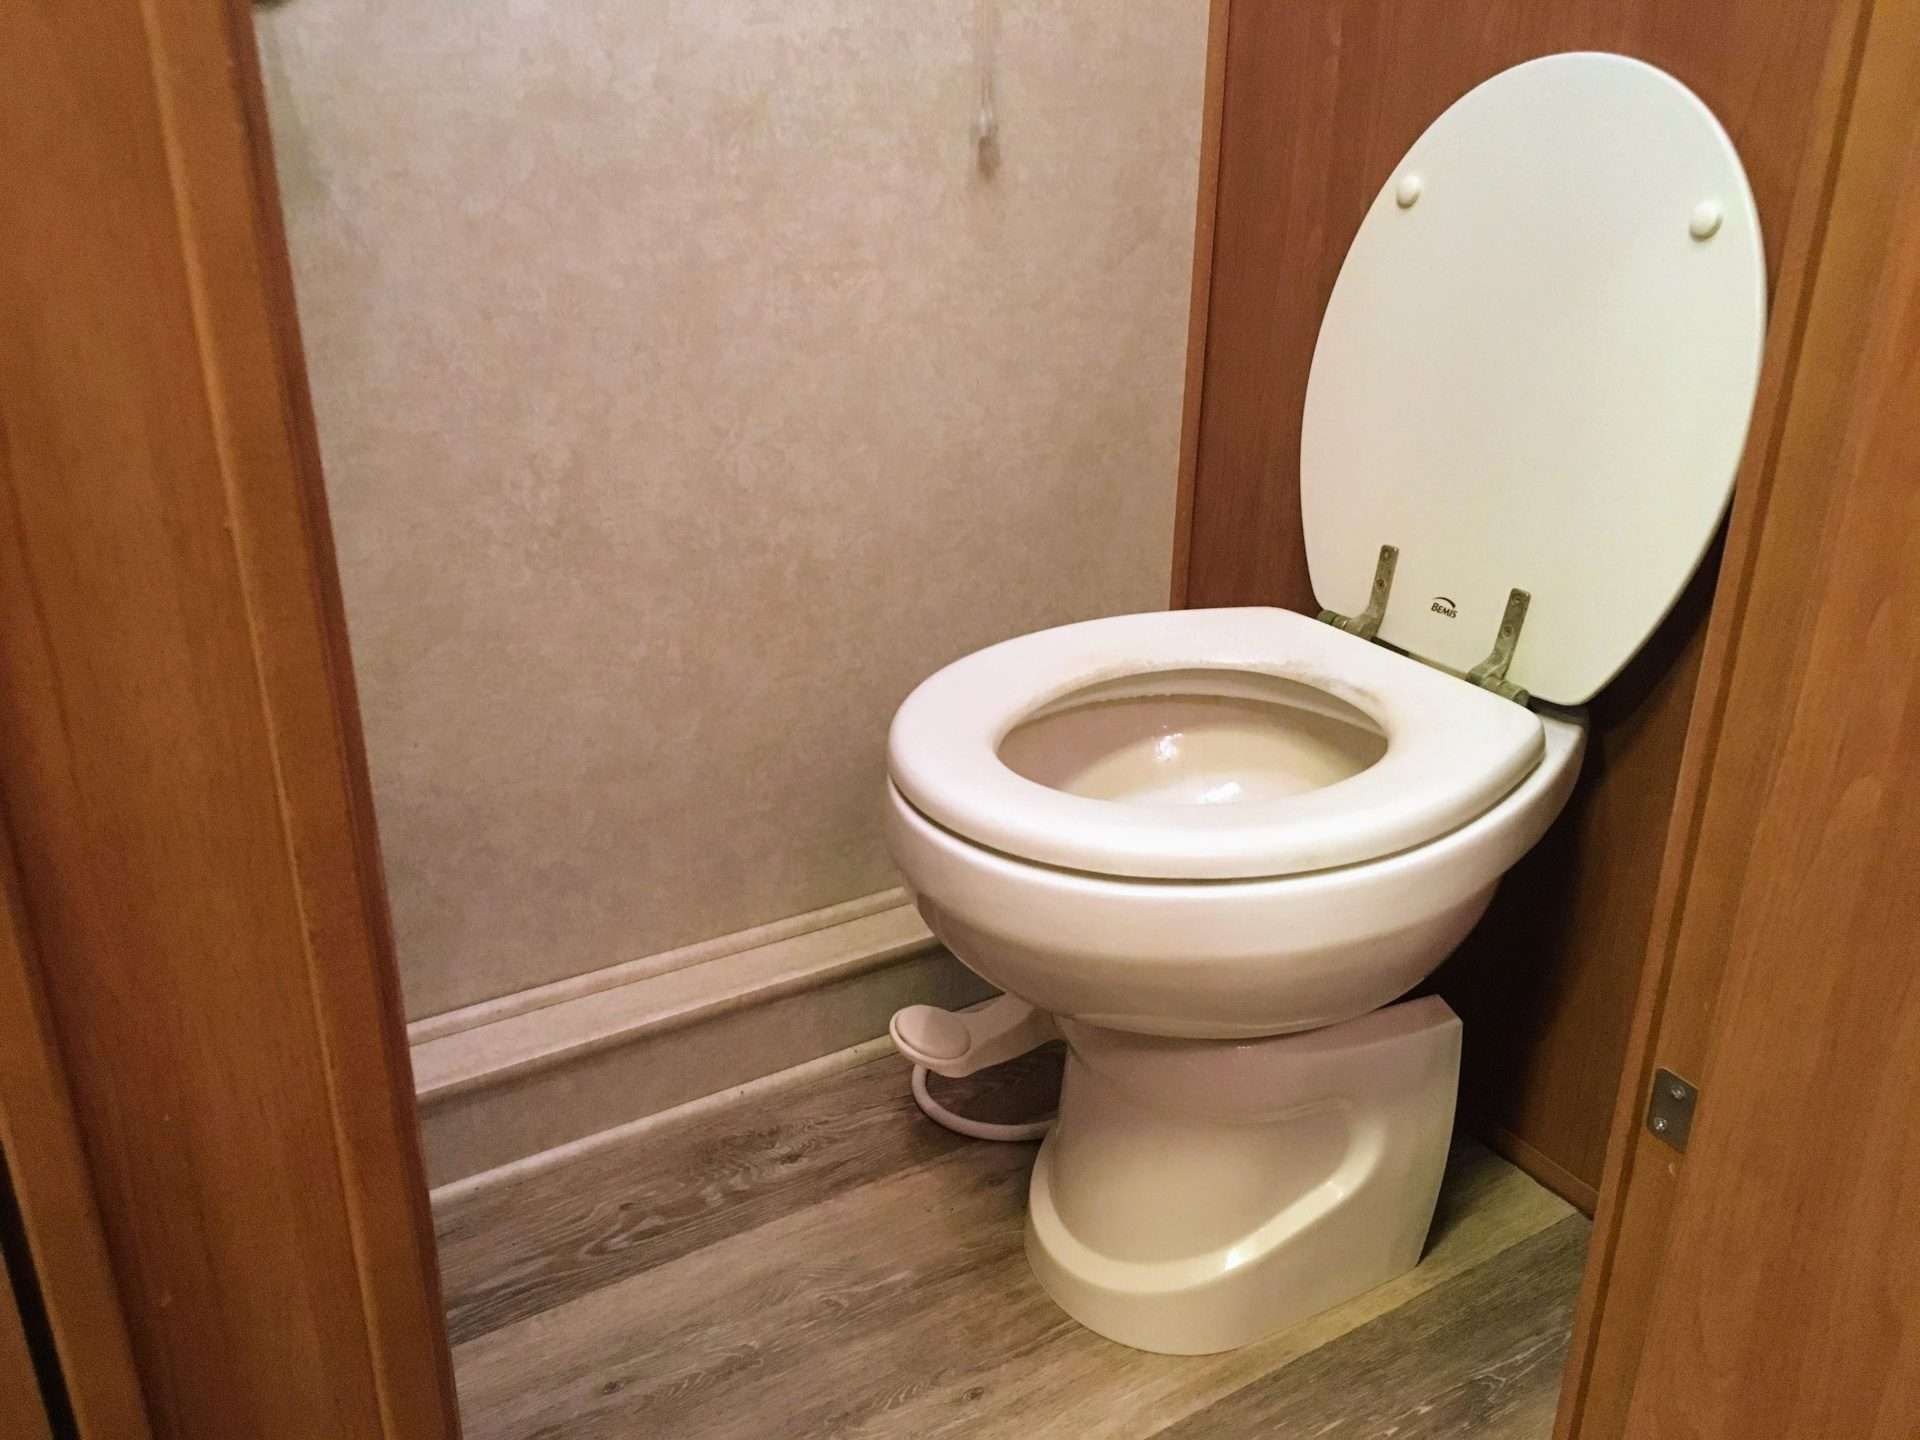 Interior of RV toilet